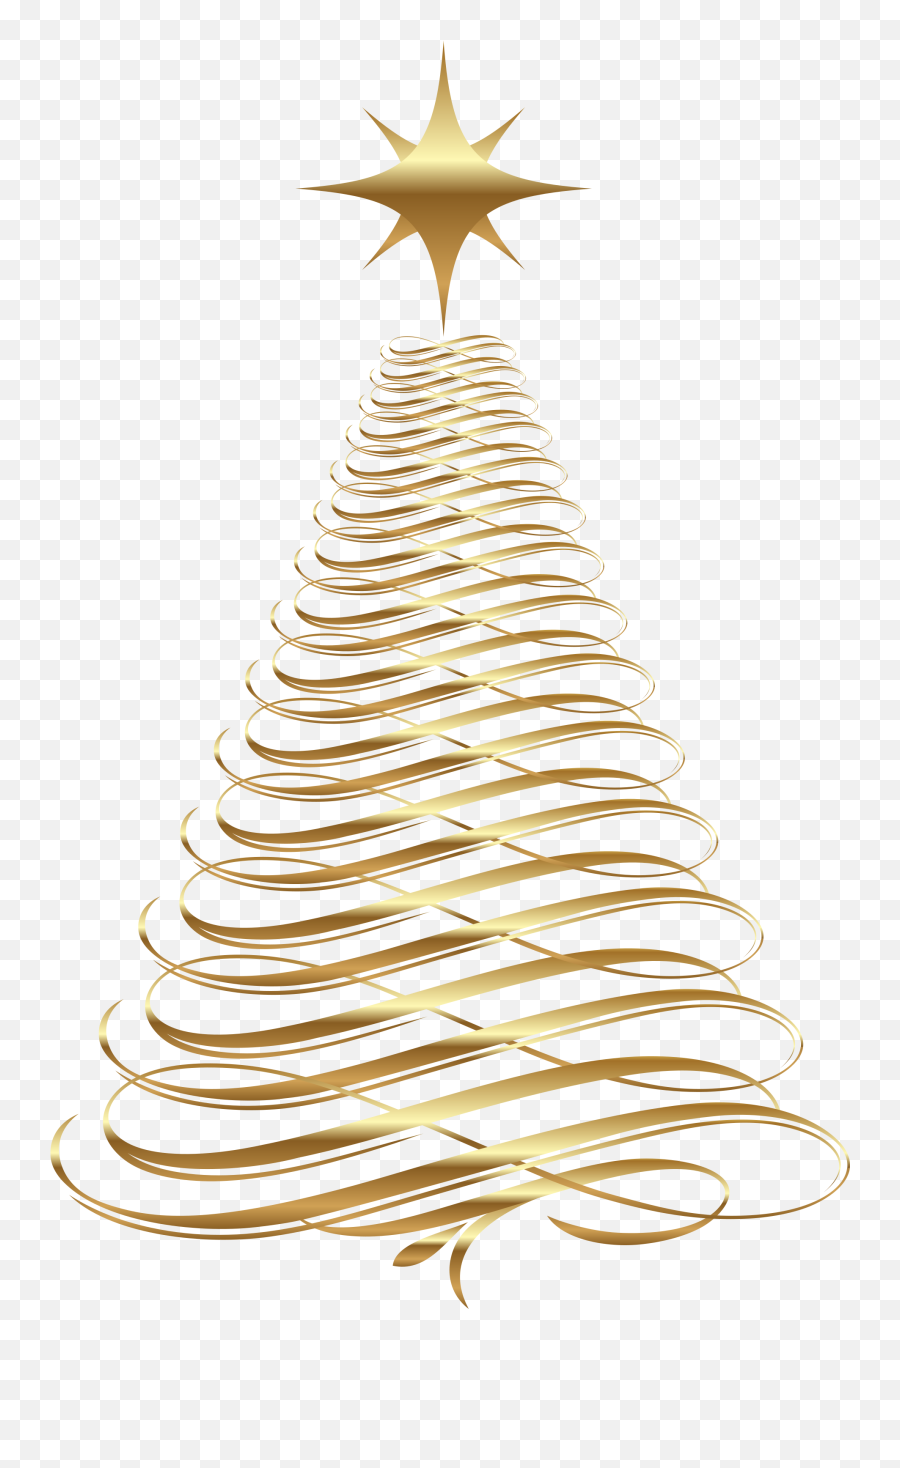 Download Hd Arbolito De Navidad Png - Gold Christmas Clipart,Tree Clipart Transparent Background